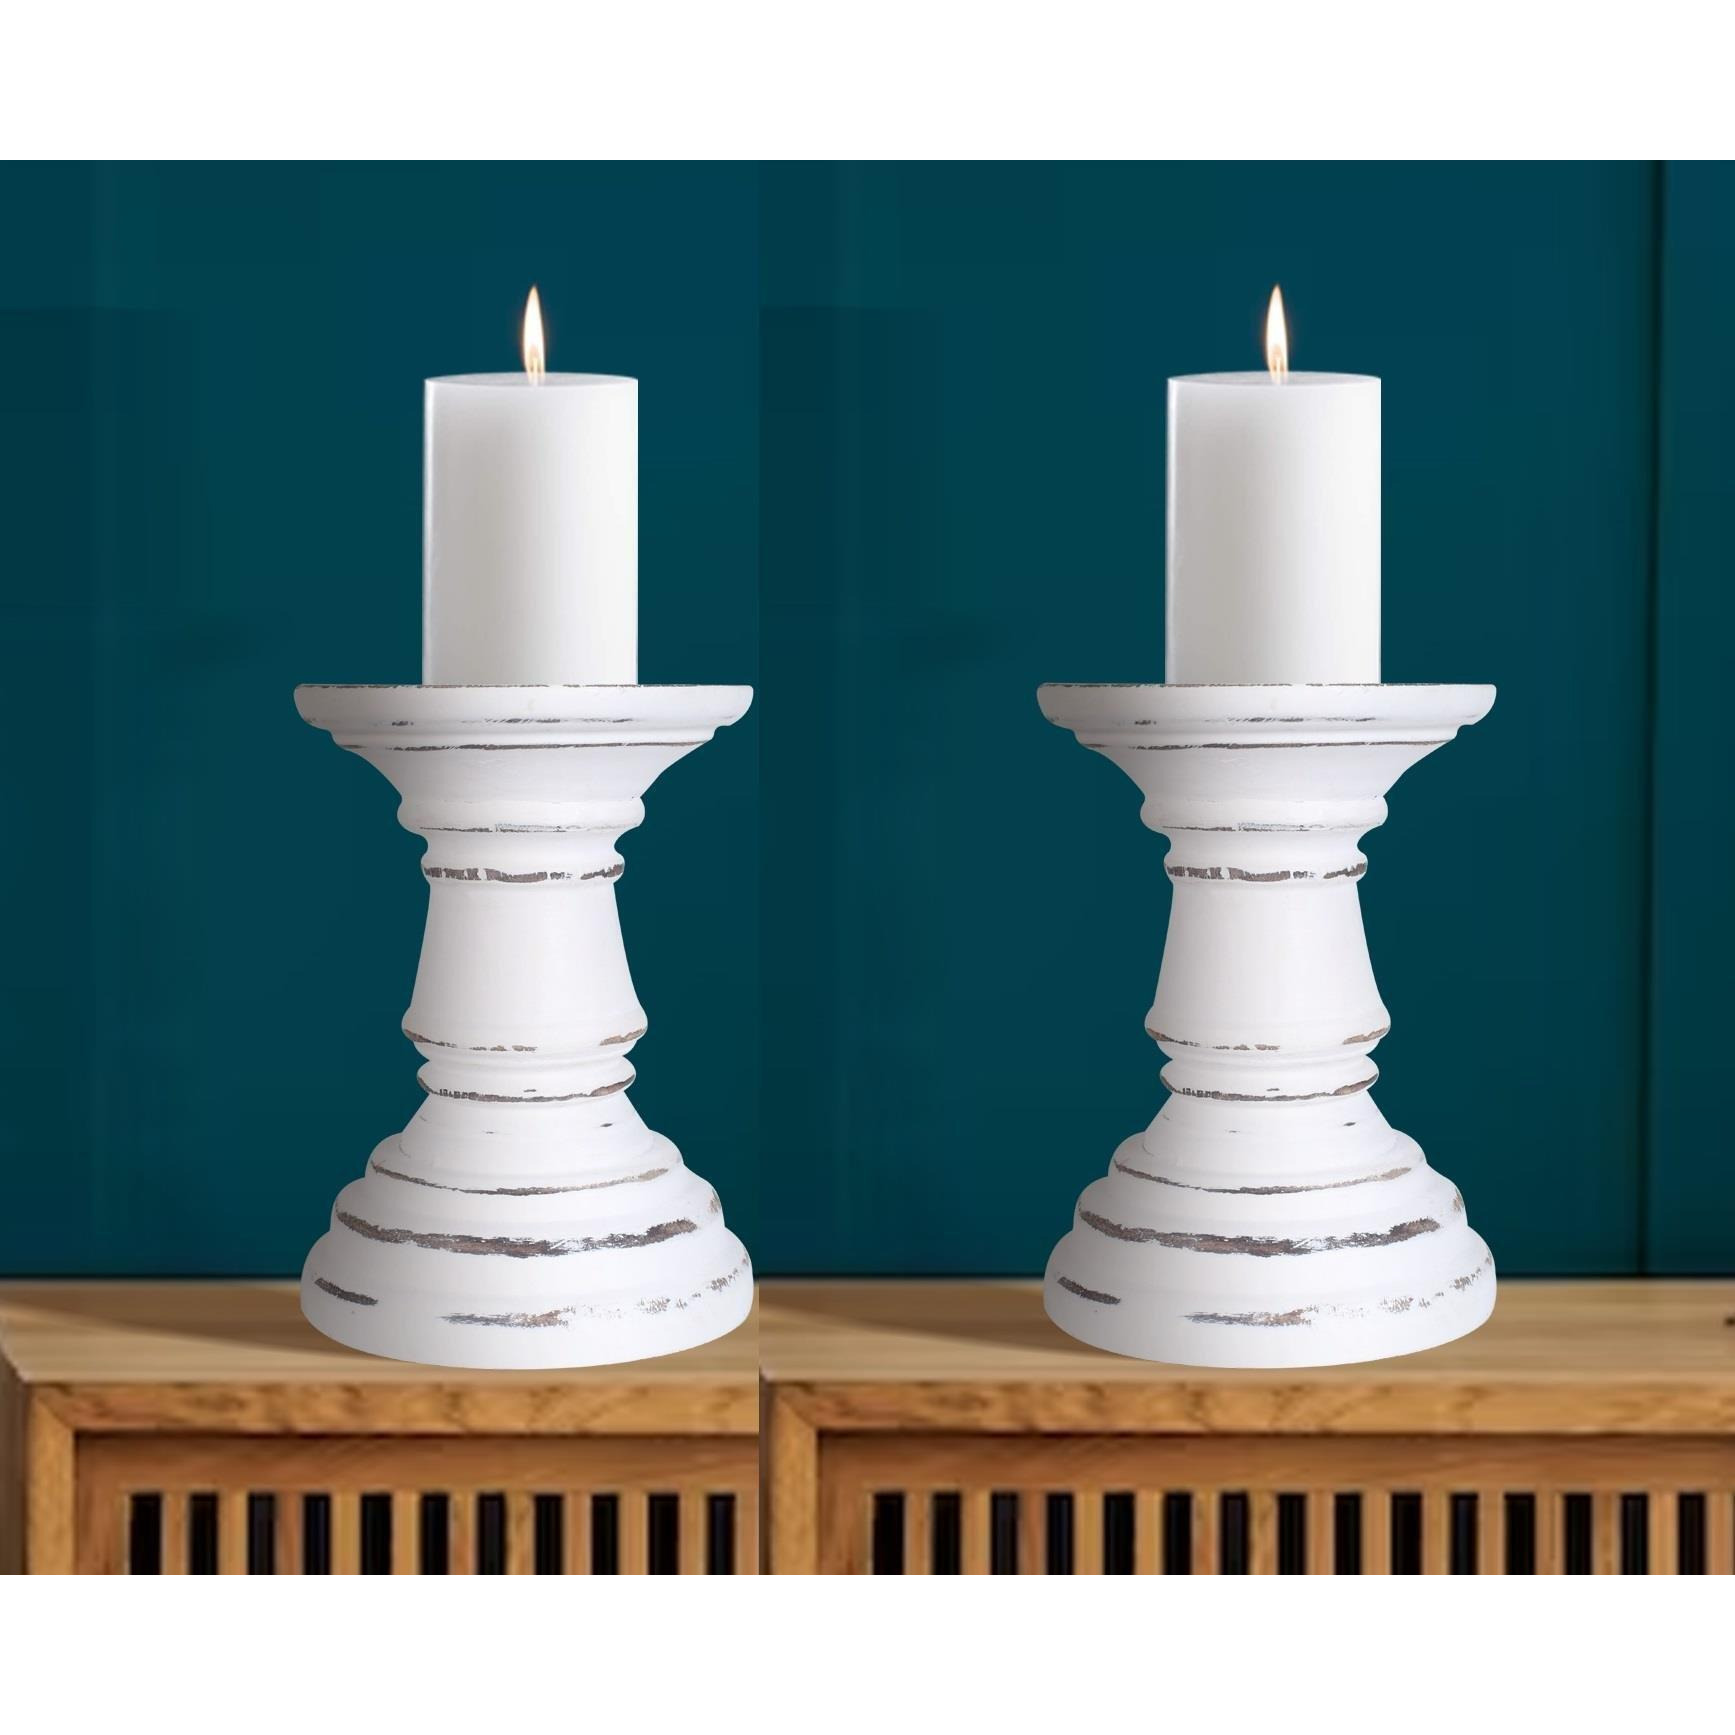 SET OF 2 Rustic Antique Carved Wooden Pillar Church Candle Holder,White Light,Medium 19cm - image 1